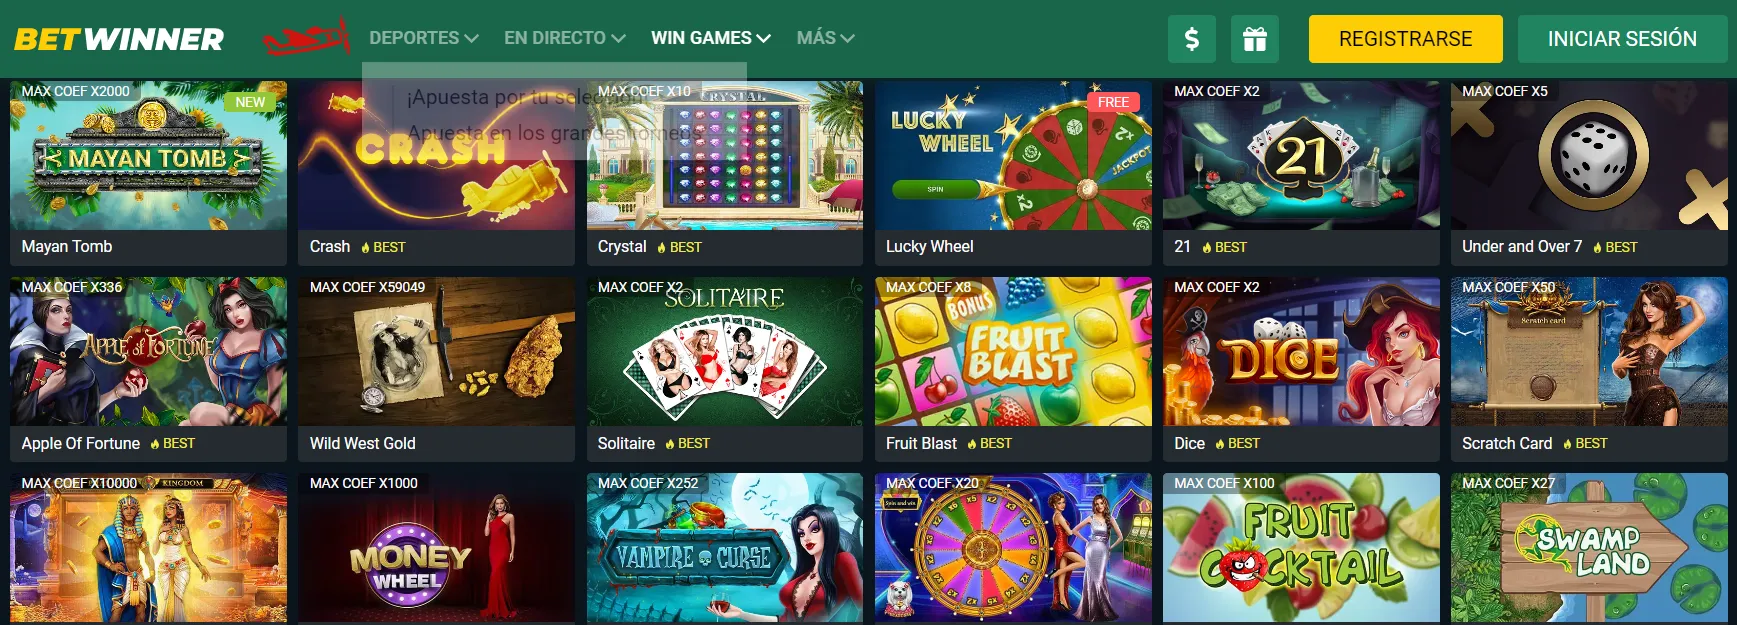 nuevos casinos online betwinner